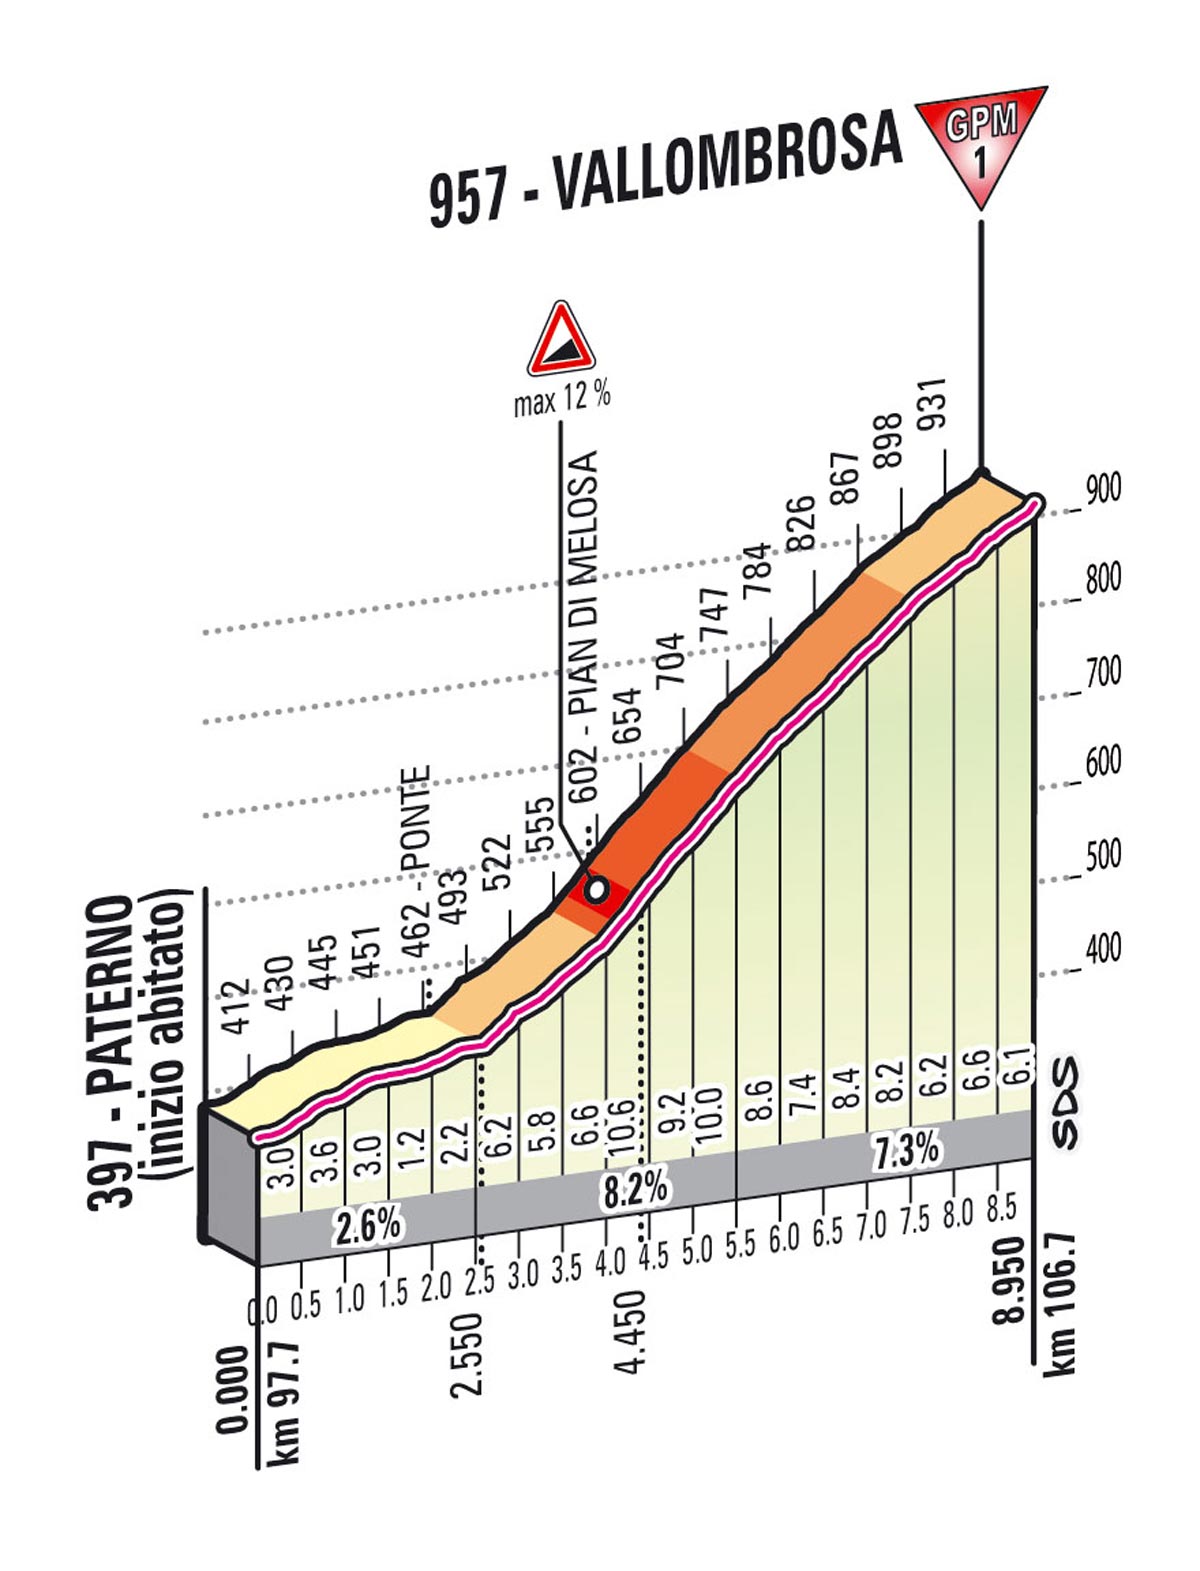 Giro d'Italia 2013 Stage 9 climb details (Vallombrosa)